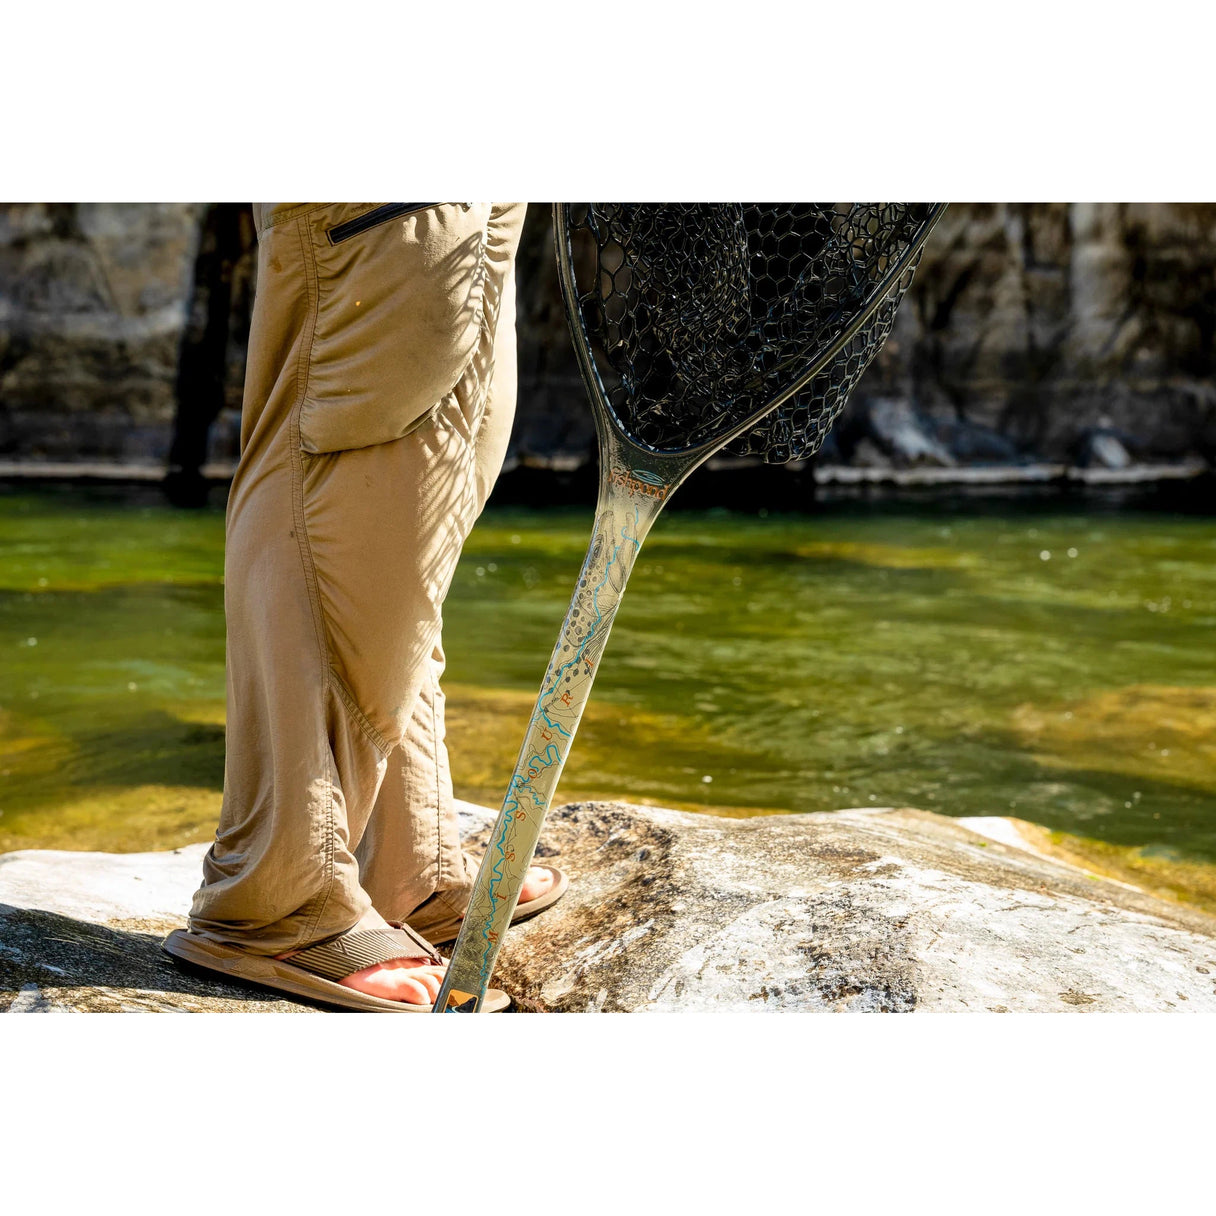 Fishpond Nomad Mid-Length Net - Upper Missouri Waterkeeper